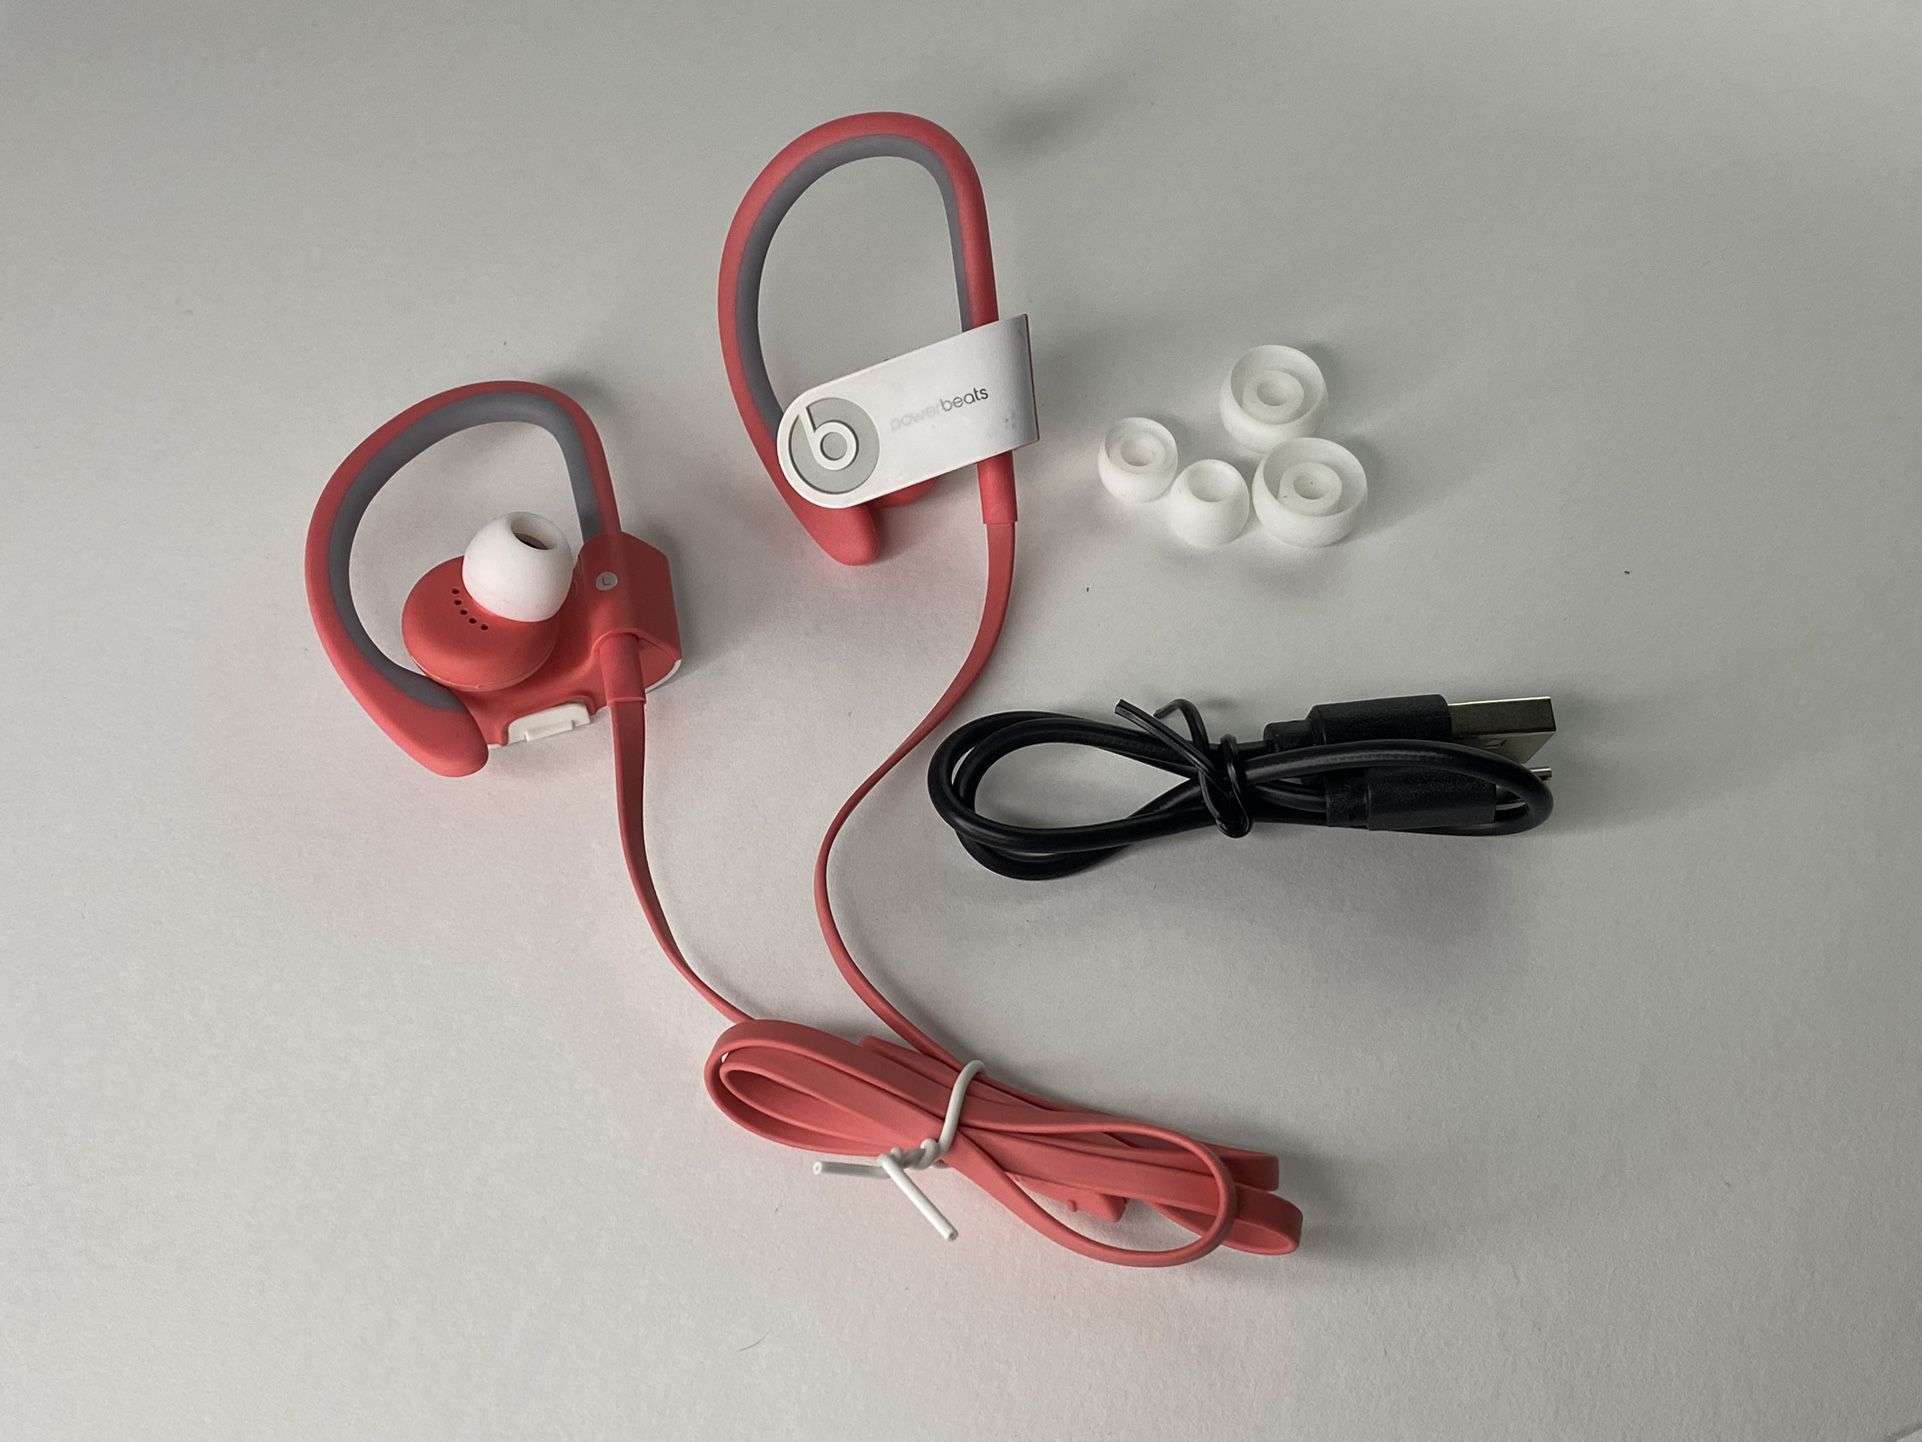 NEW Pair Of Power Beats 3 Bluetooth In-Ear Wireless Headphones